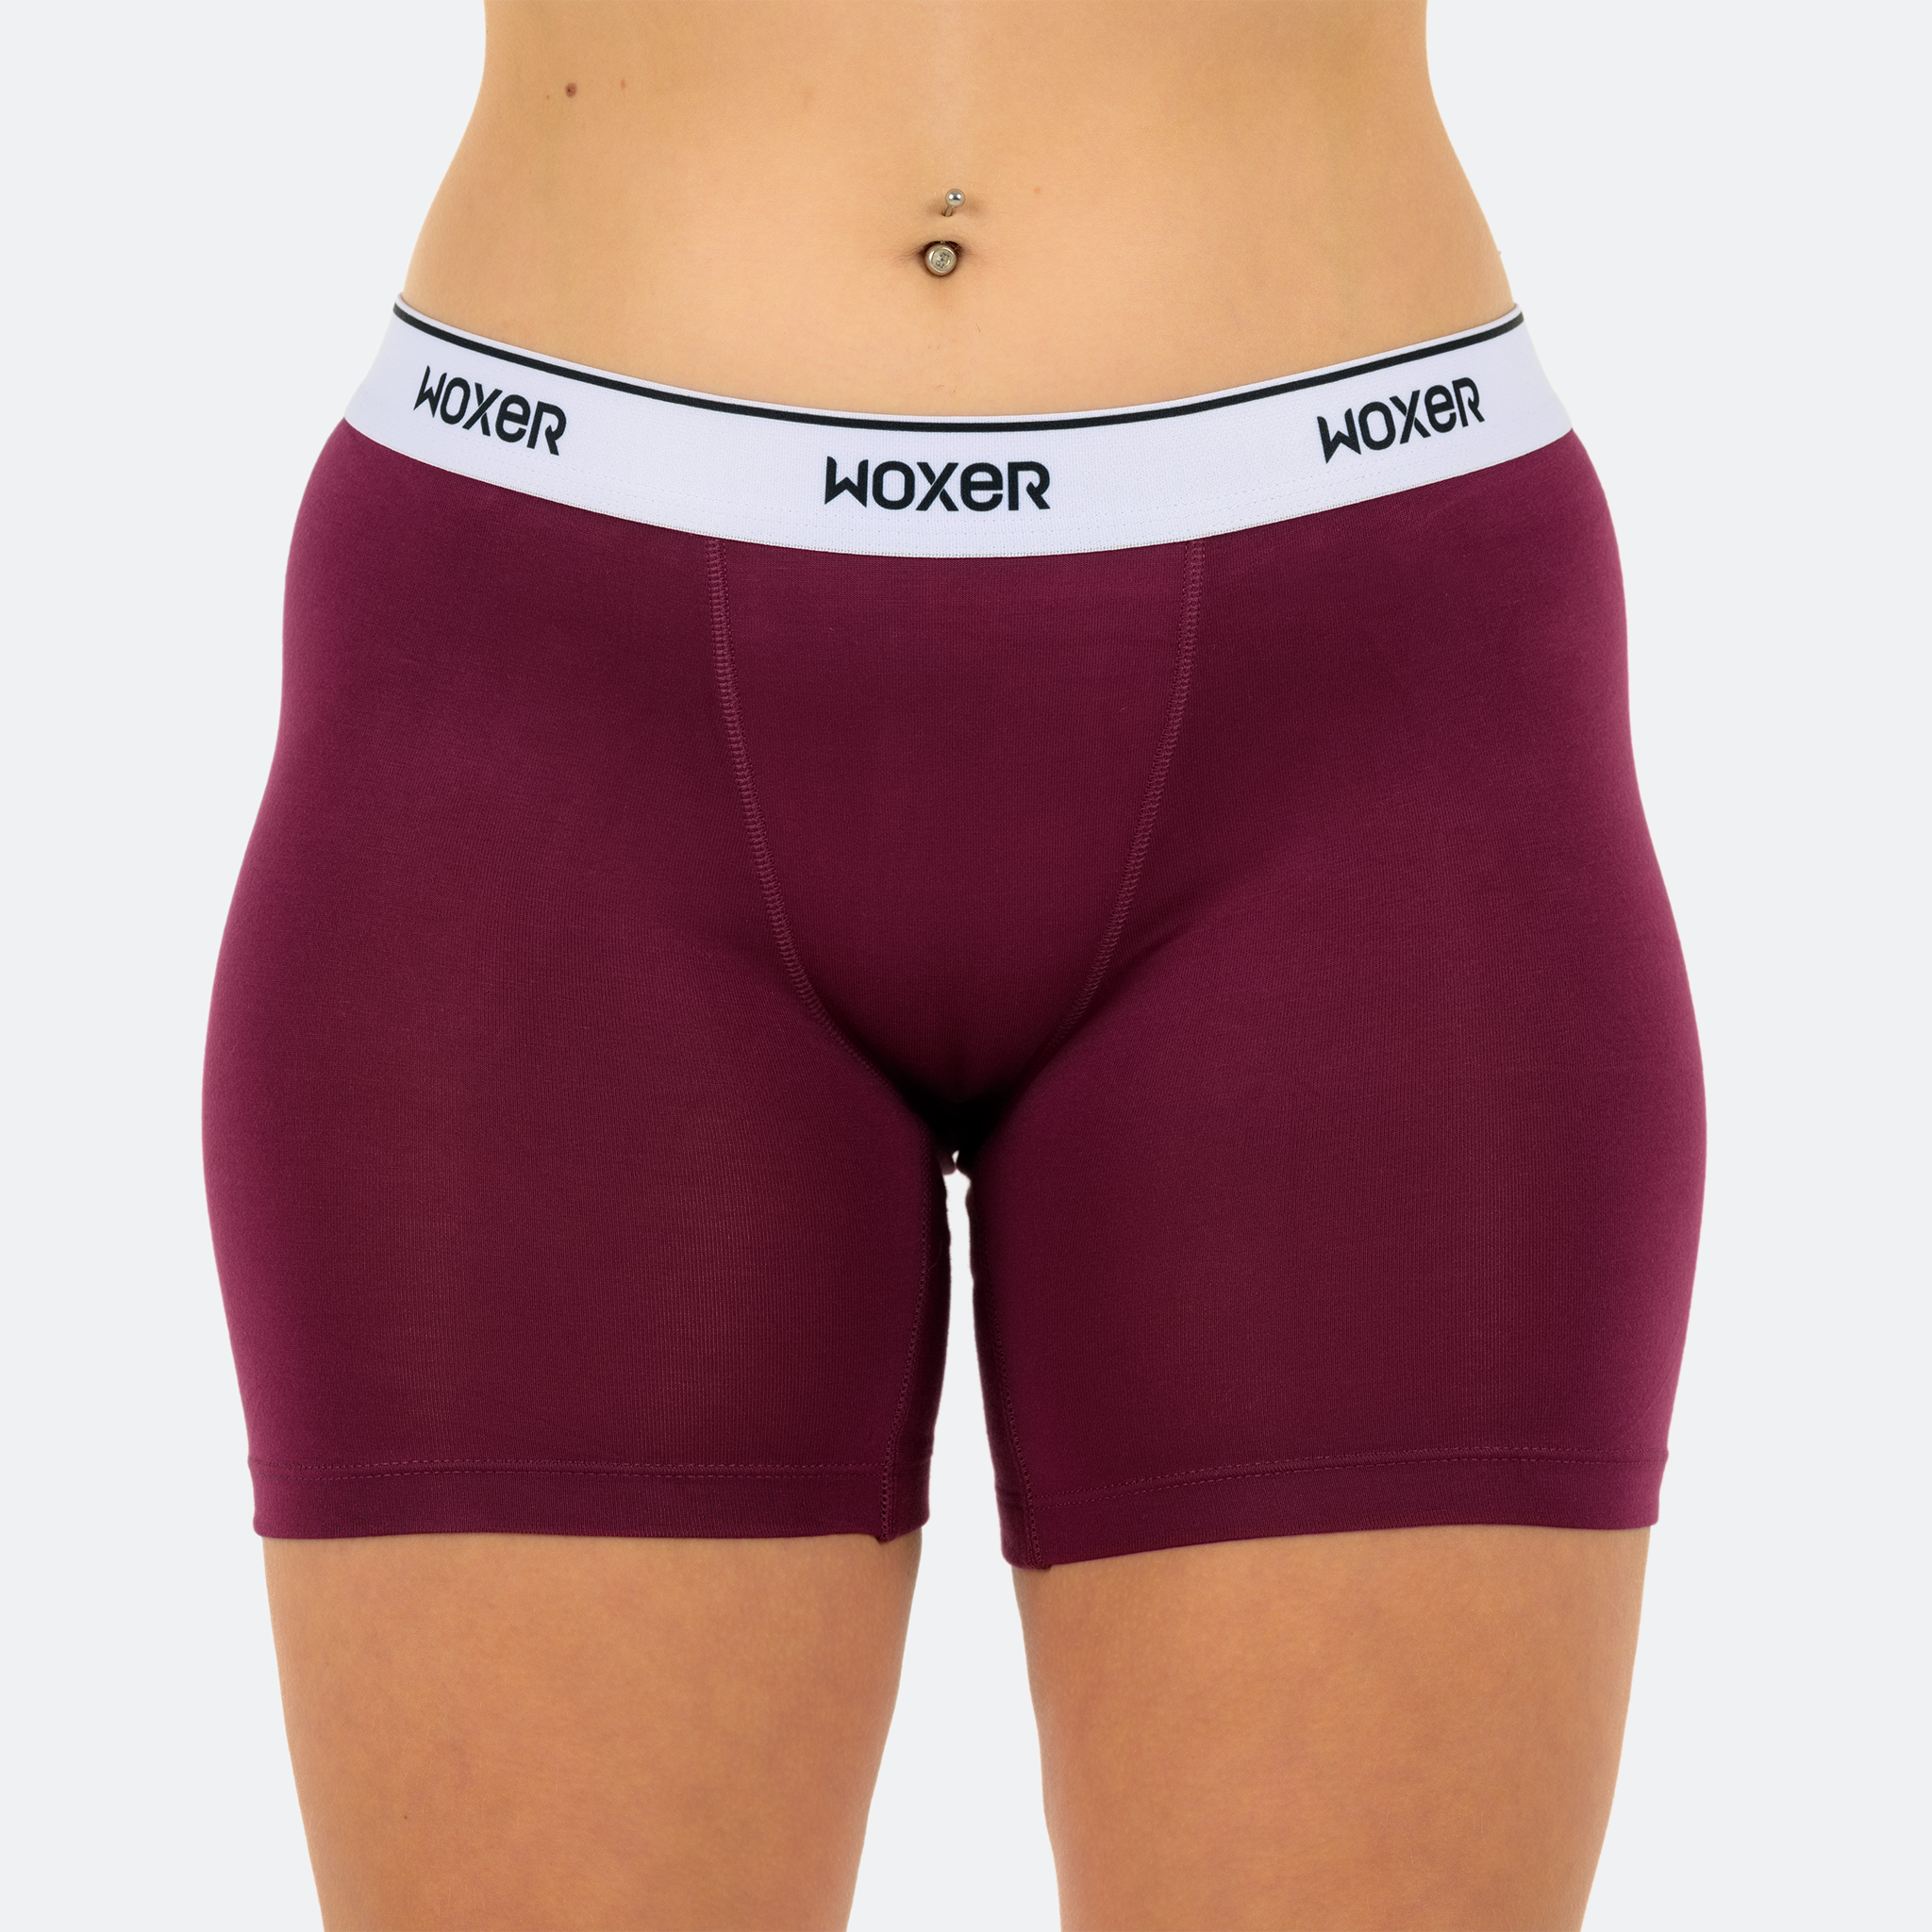 Woxer Womens Boxer Briefs Underwear, Baller 5” Boyshorts Panties Soft  Anti-Chafing, No Roll Inseam, Heather Grey, 3X-Large